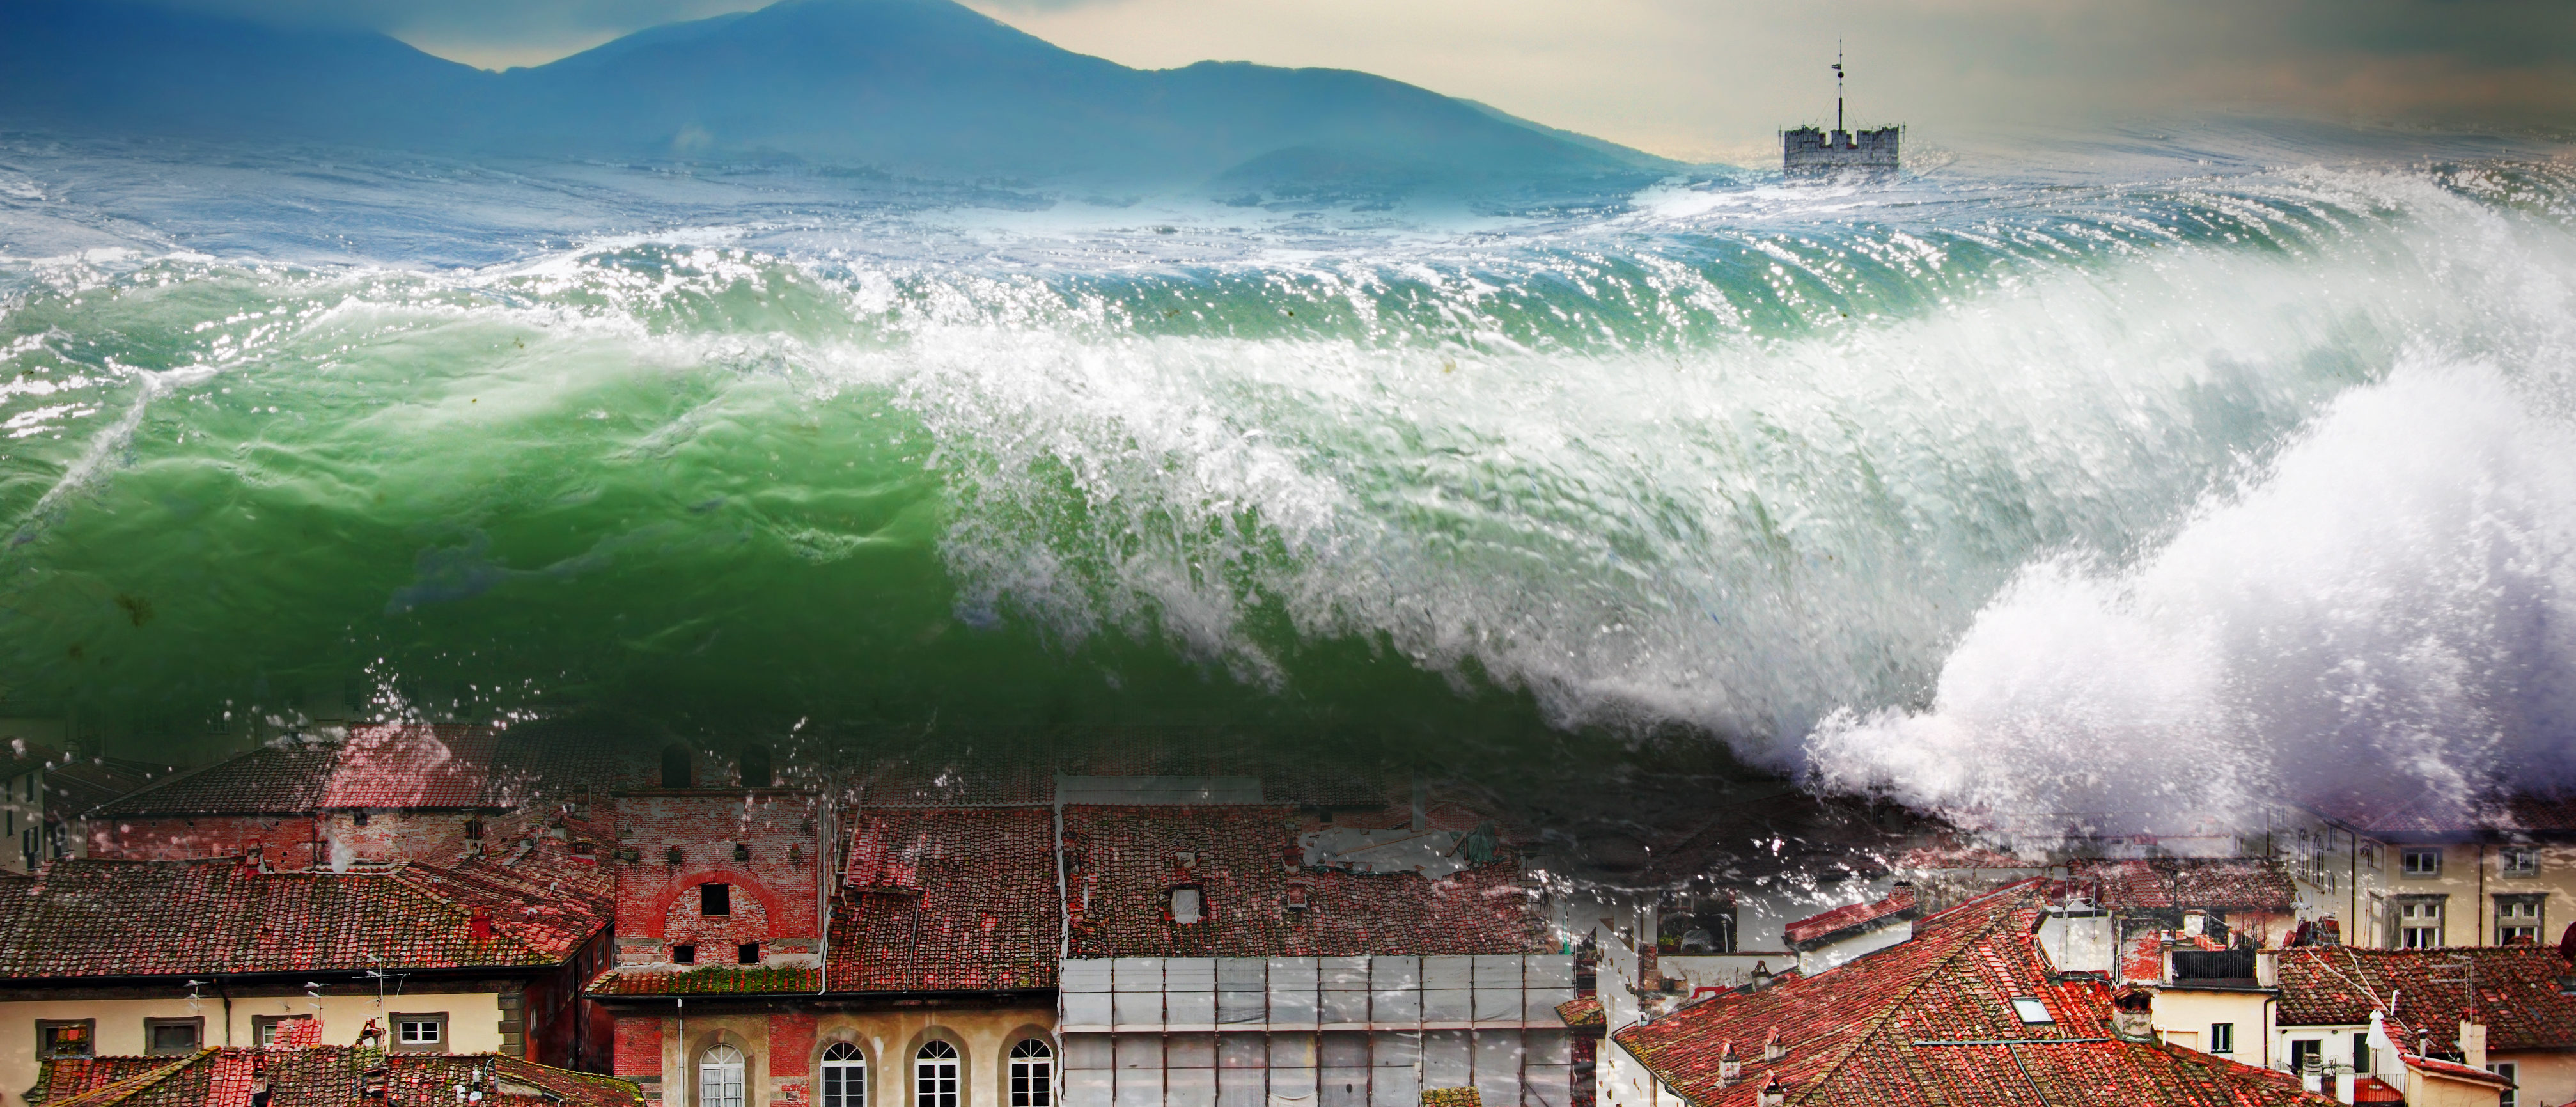 Giant-wave-crashing-above-the-city.-Global-flood.-e1517933481692.jpg